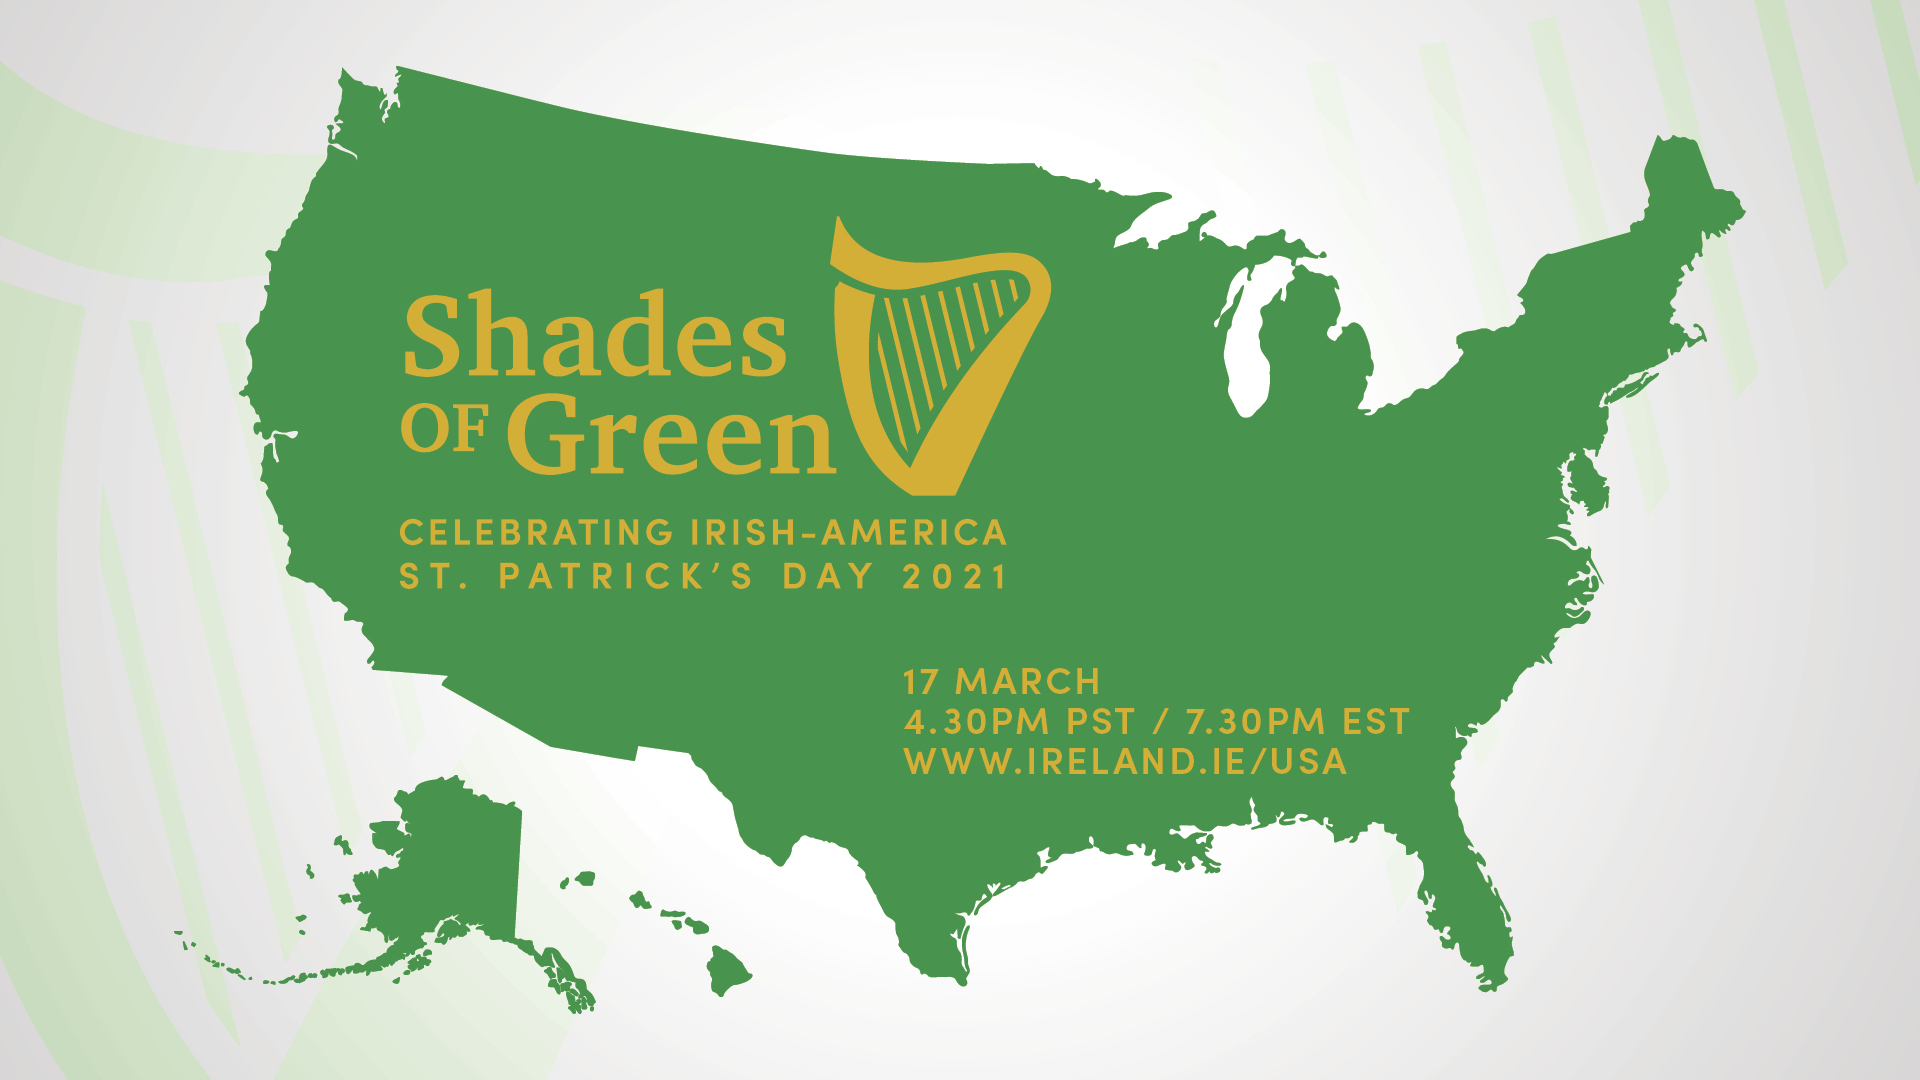 Shades of Green-St Patrick's Day Celebration of Irish America